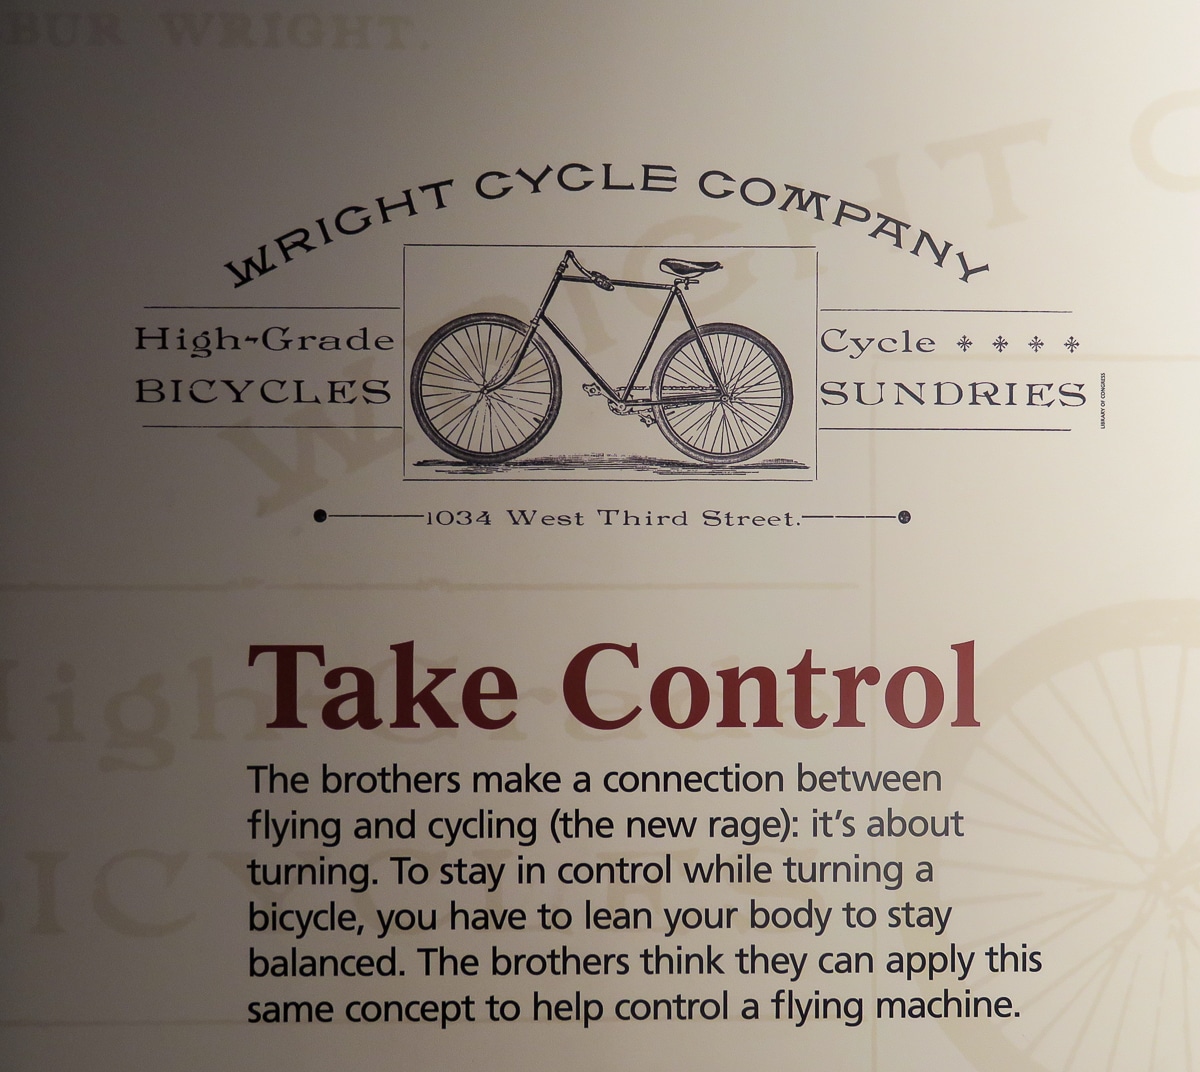 Wright Cycle Company.